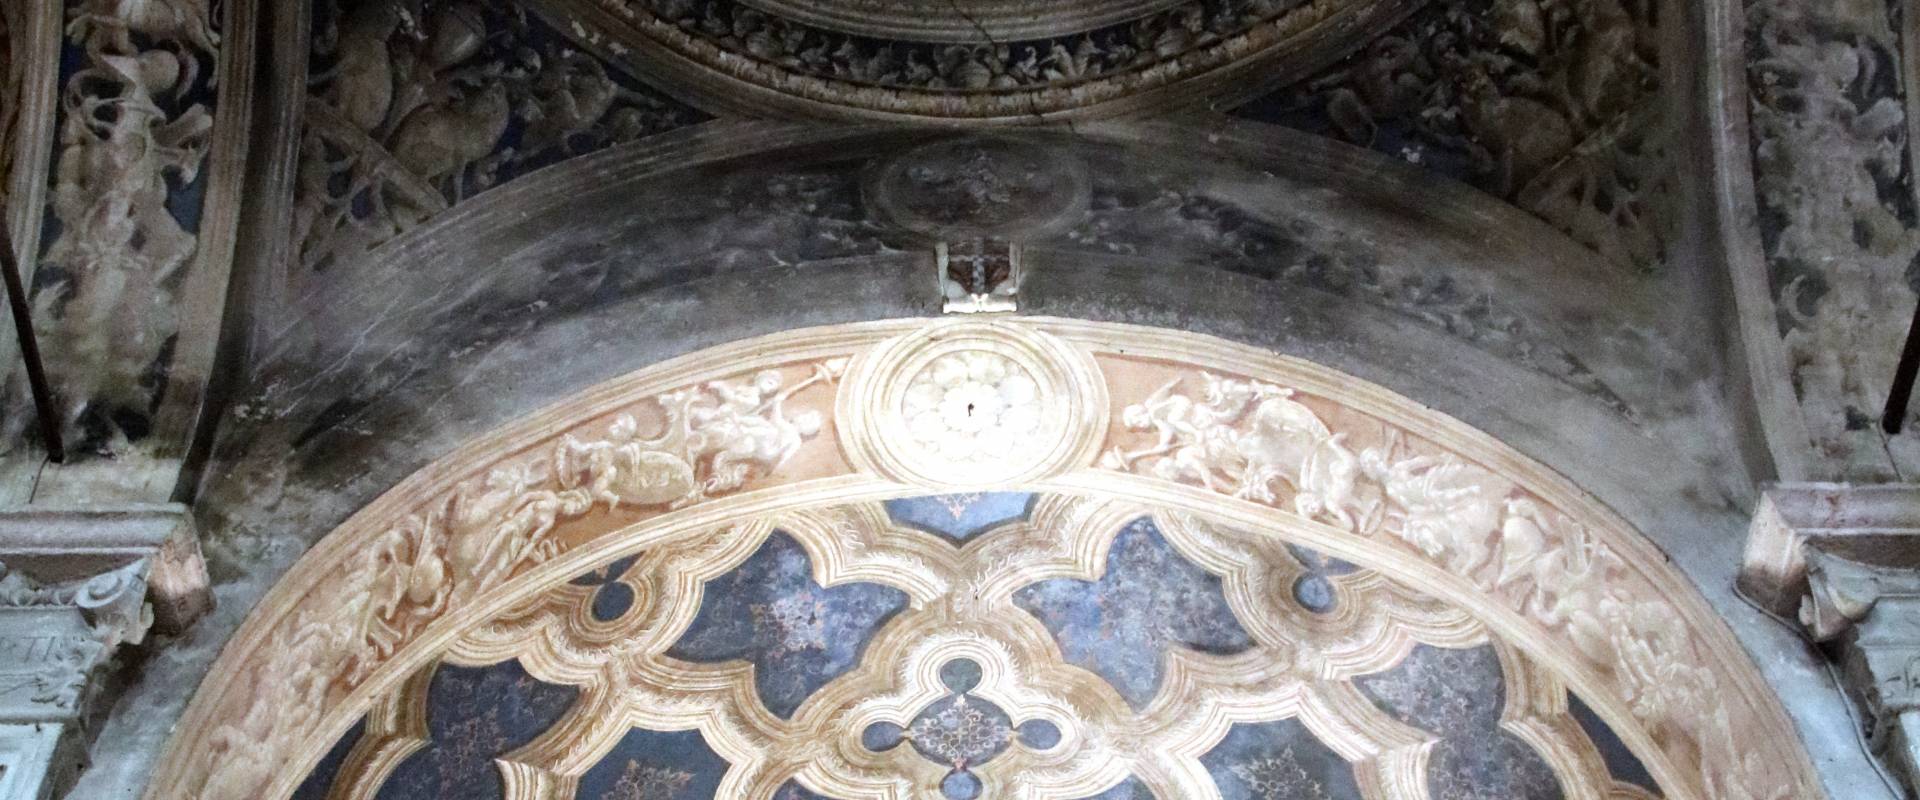 Chiesa di San Sisto (Piacenza), interno 21 photo by Mongolo1984